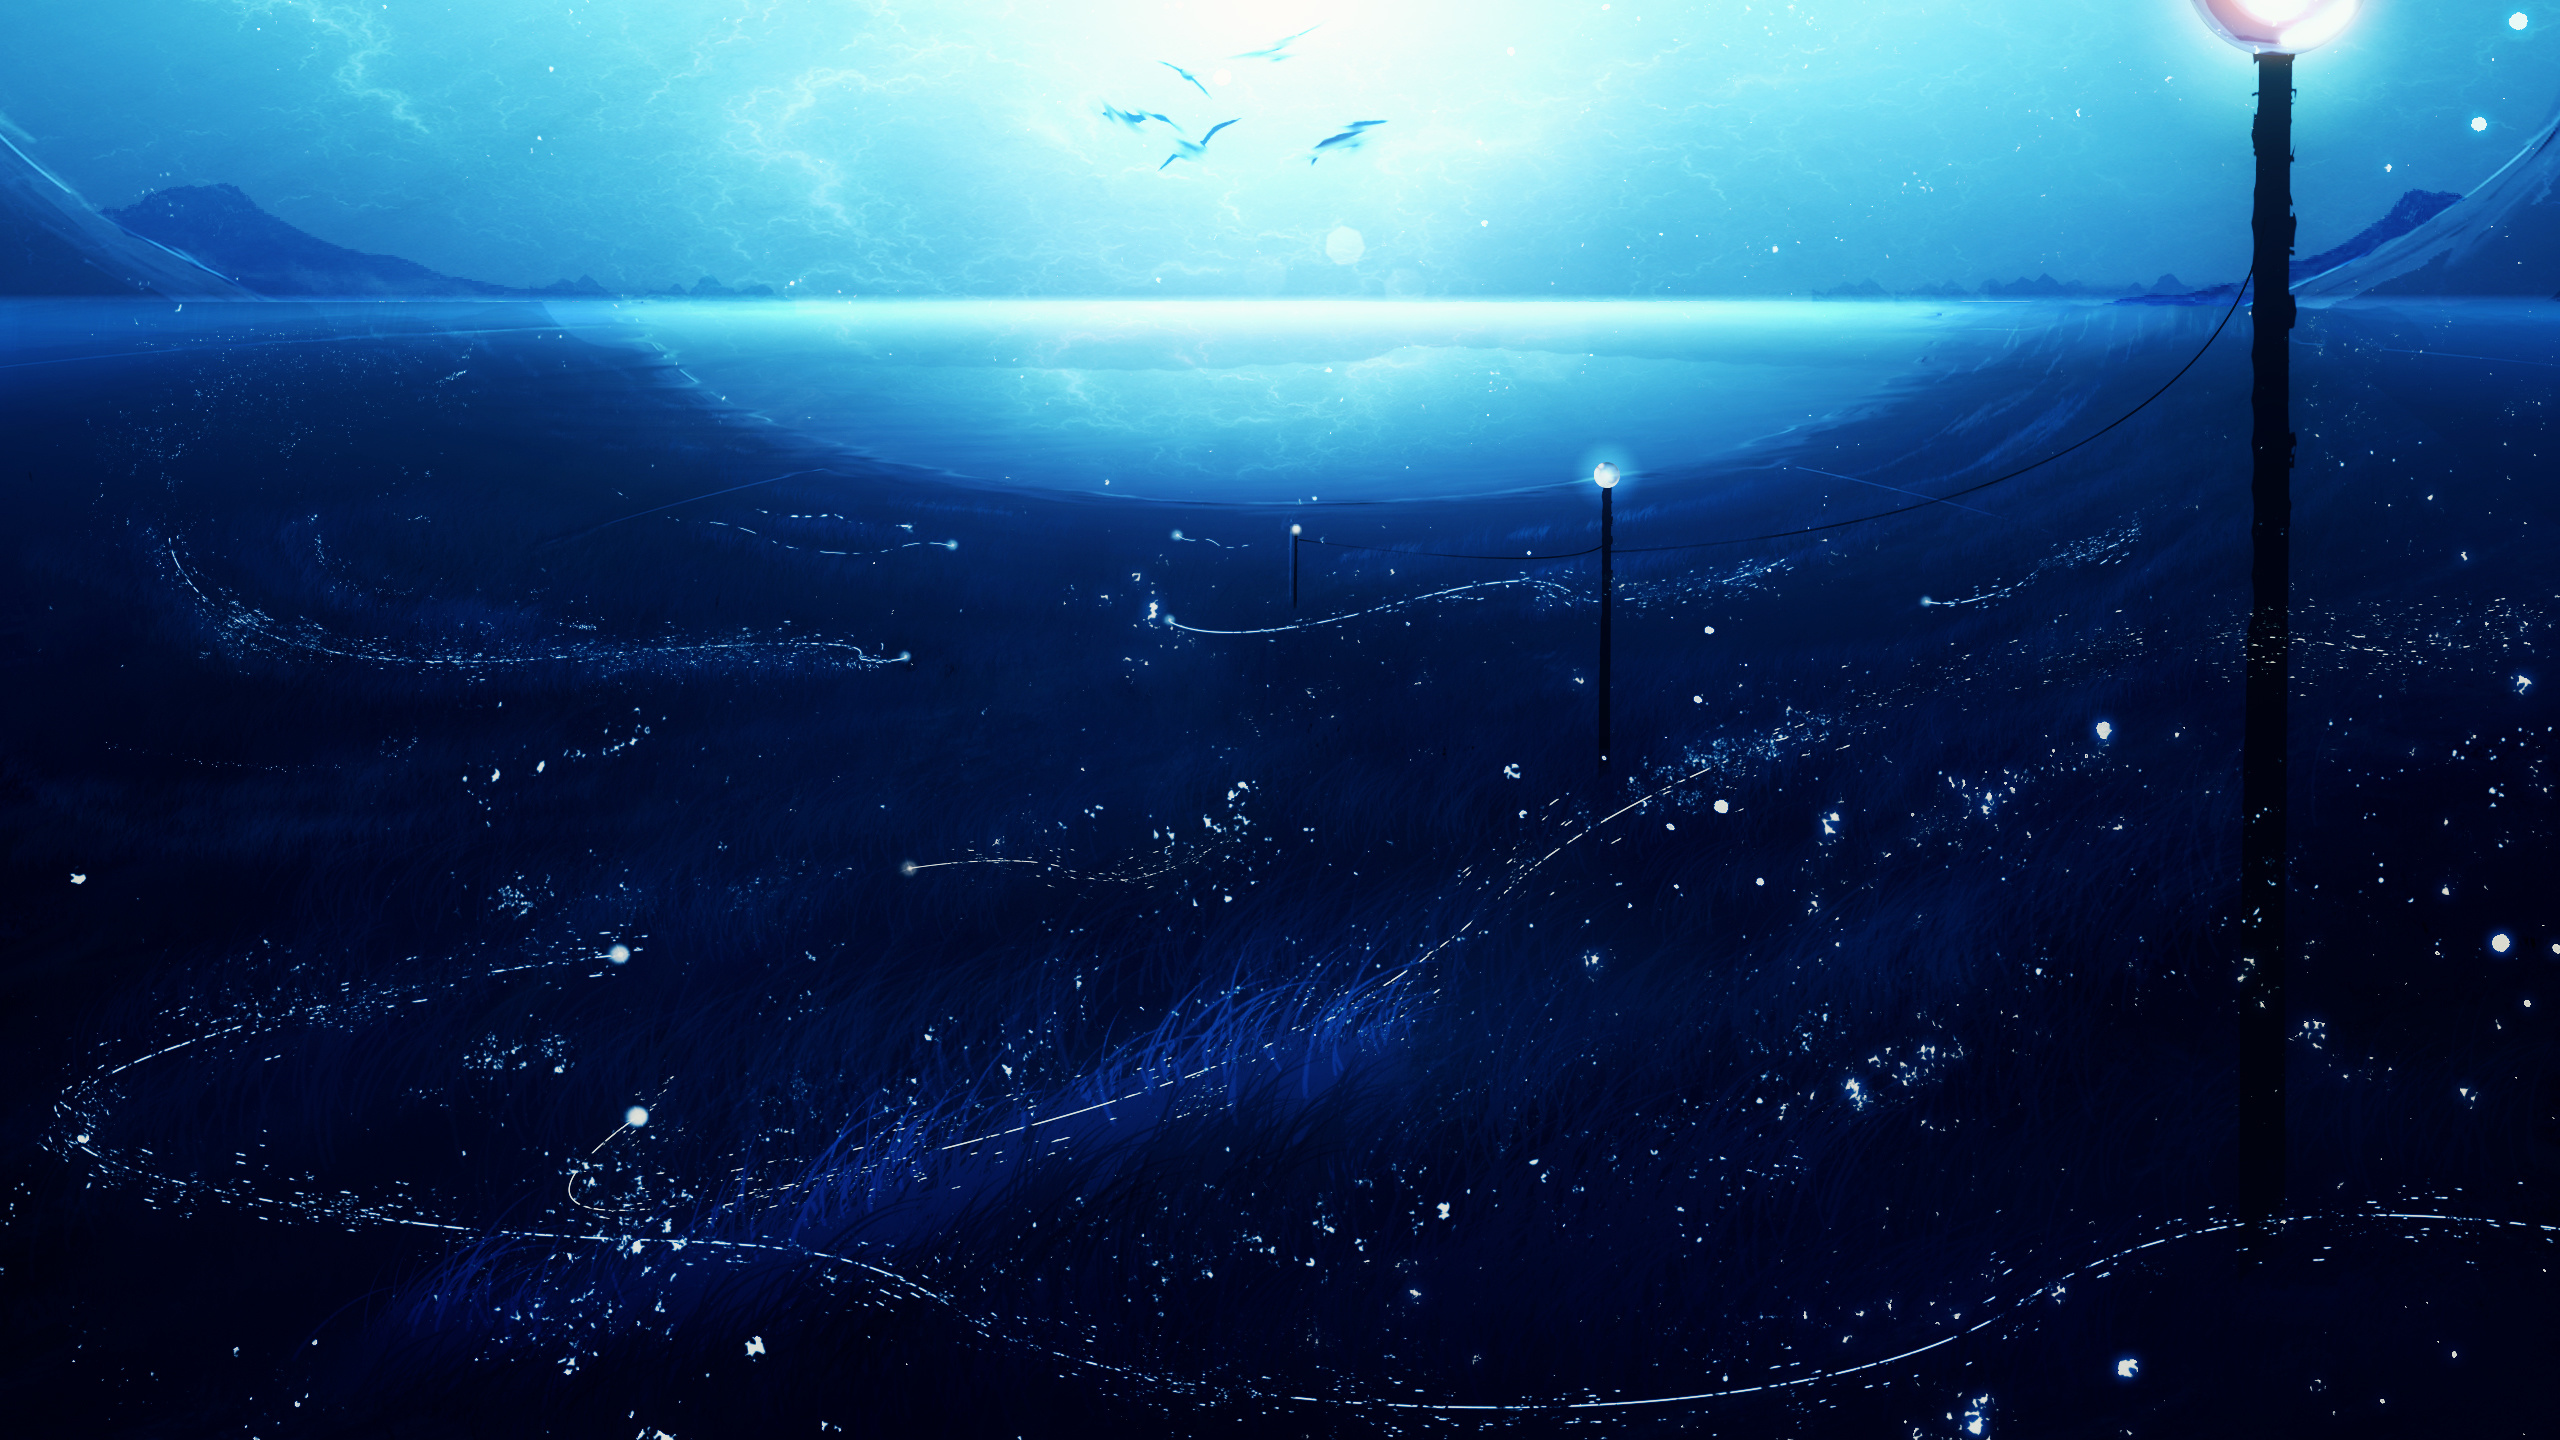 Desktop Wallpaper Anime Original Landscape Night Hd Image Picture Background 7a43c8